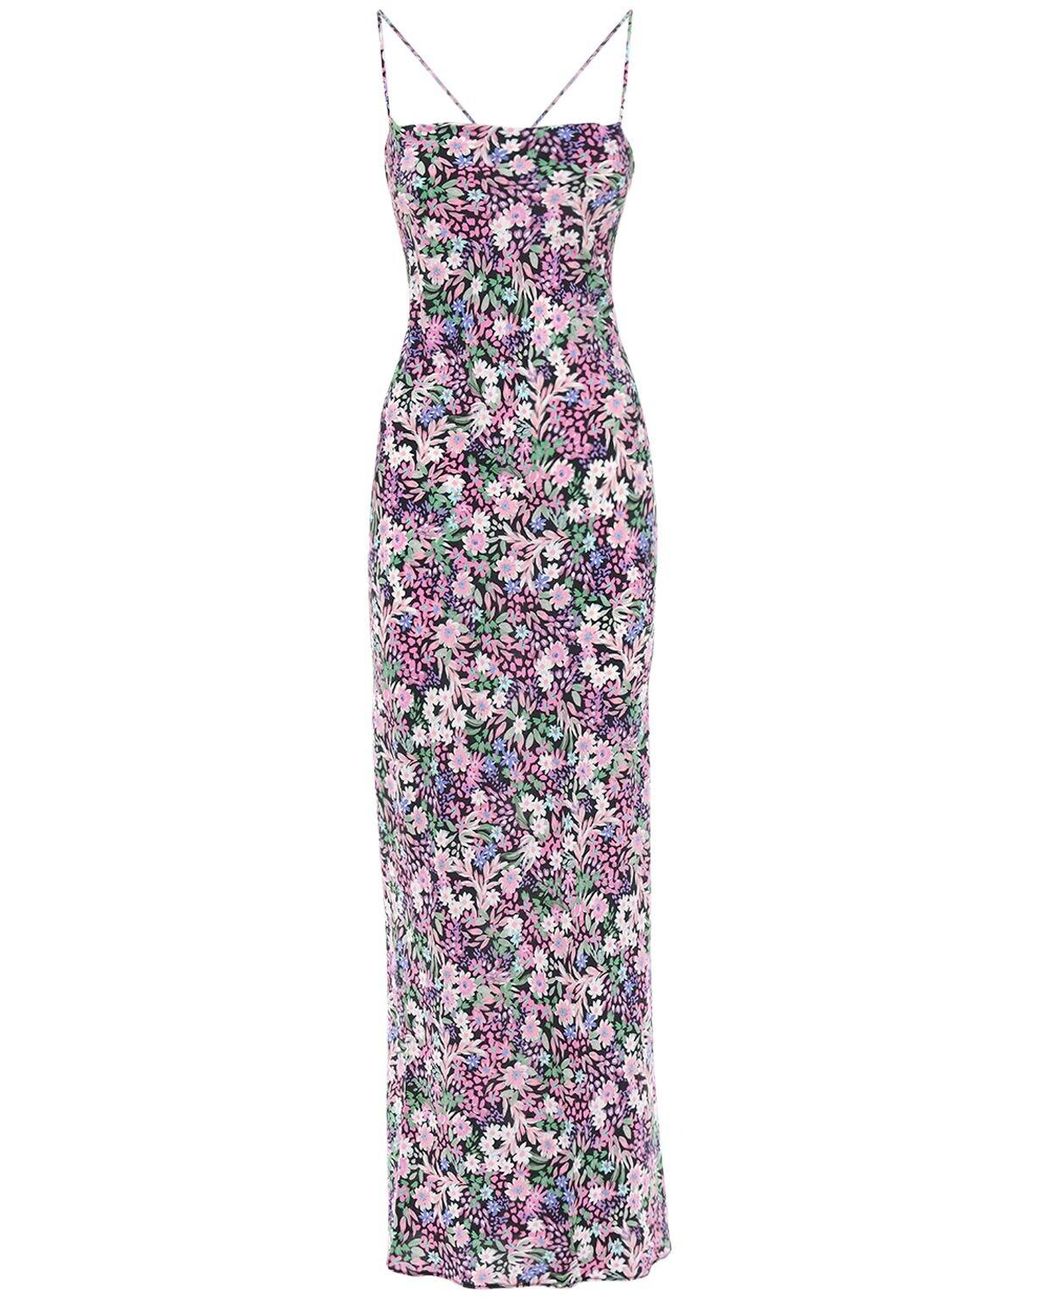 Bec & Bridge Floral Print Silk Dress in Purple - Lyst